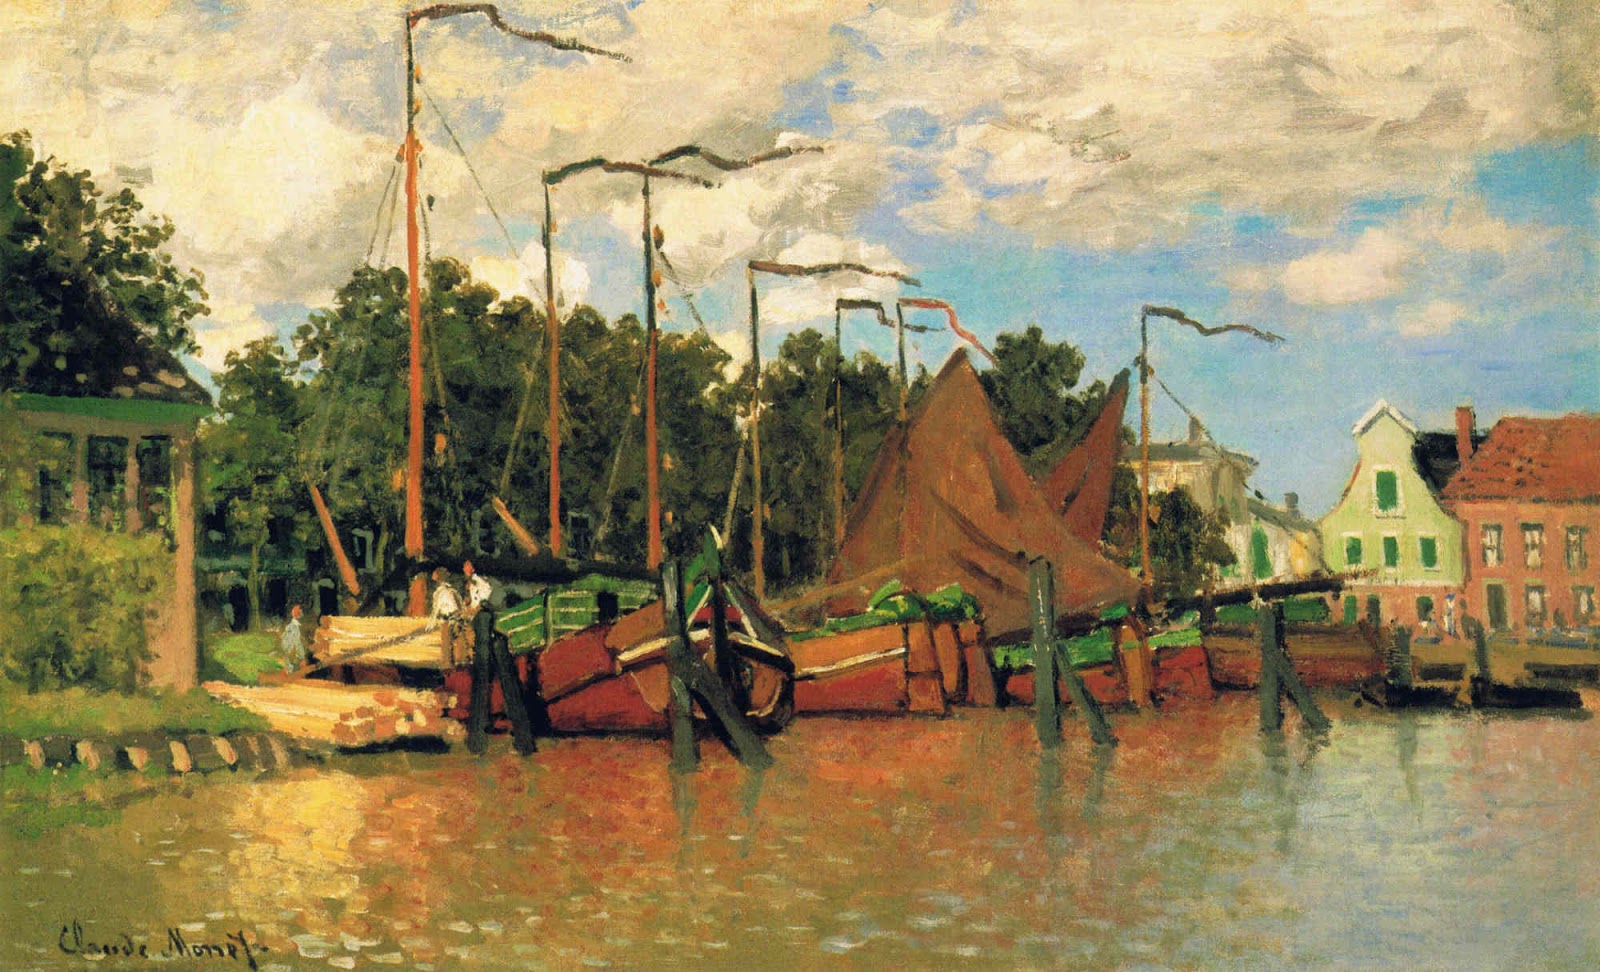 Claude+Monet-1840-1926 (141).jpg